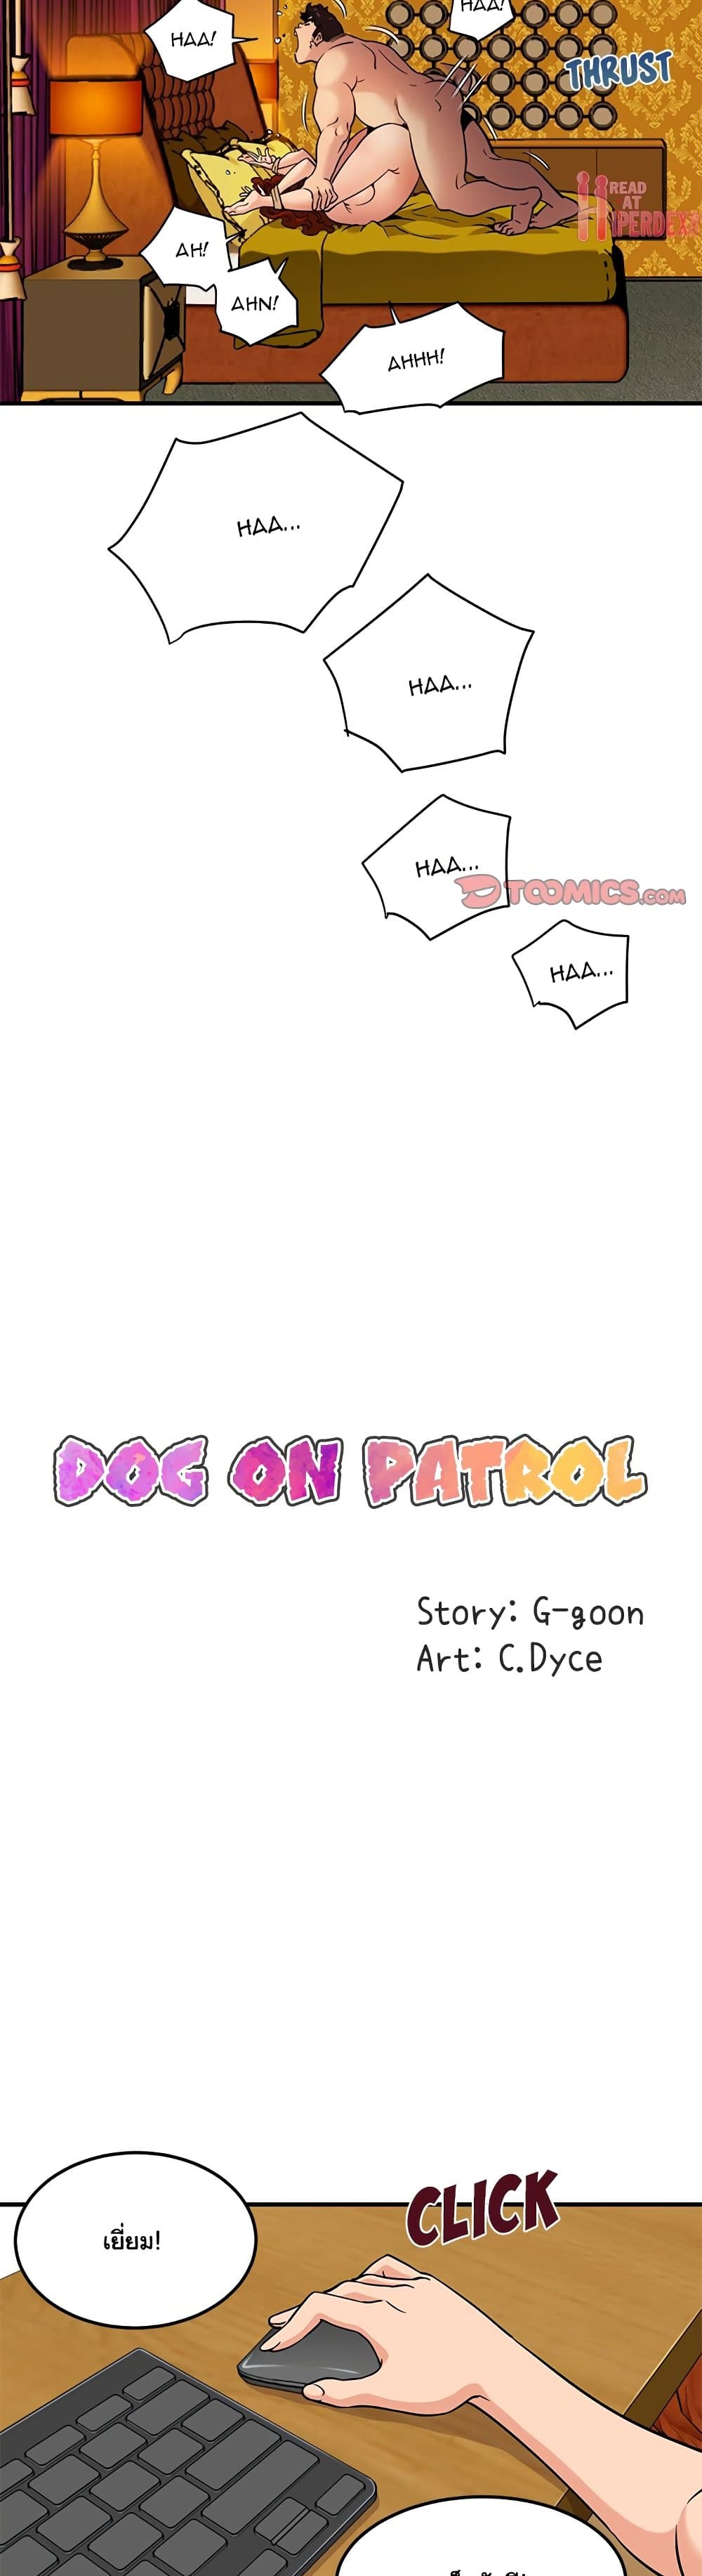 Dog on Patrol 12-12